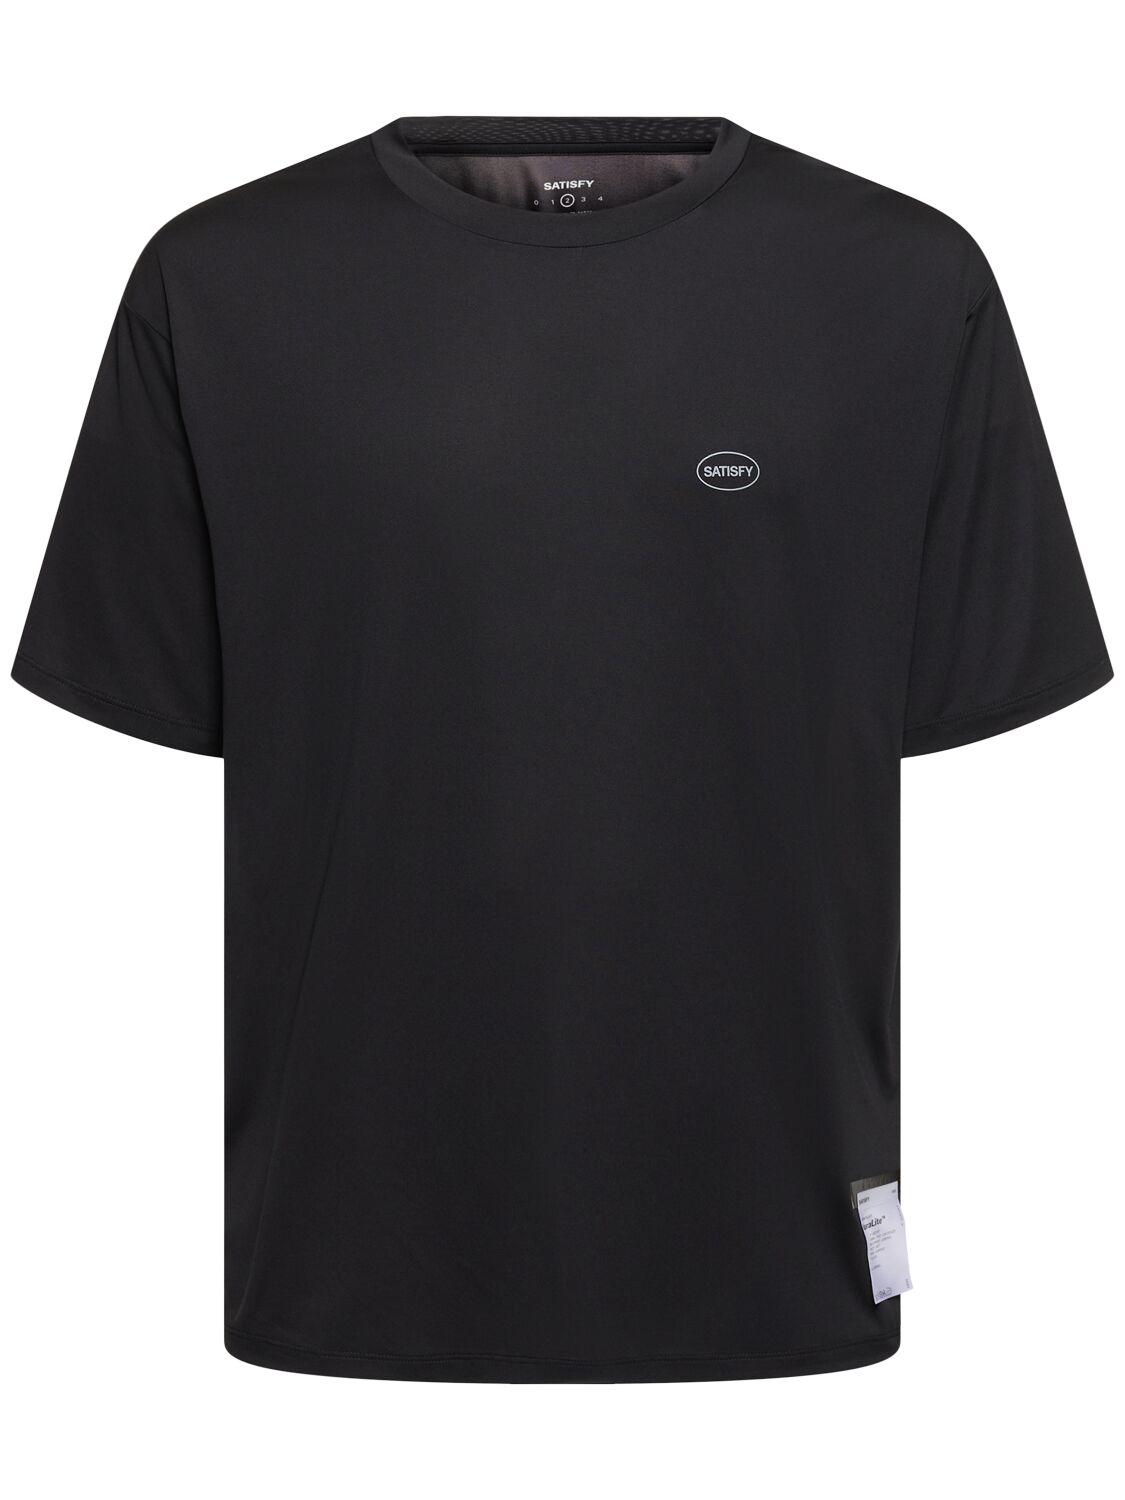 Satisfy Auralite Tech T-shirt In Black